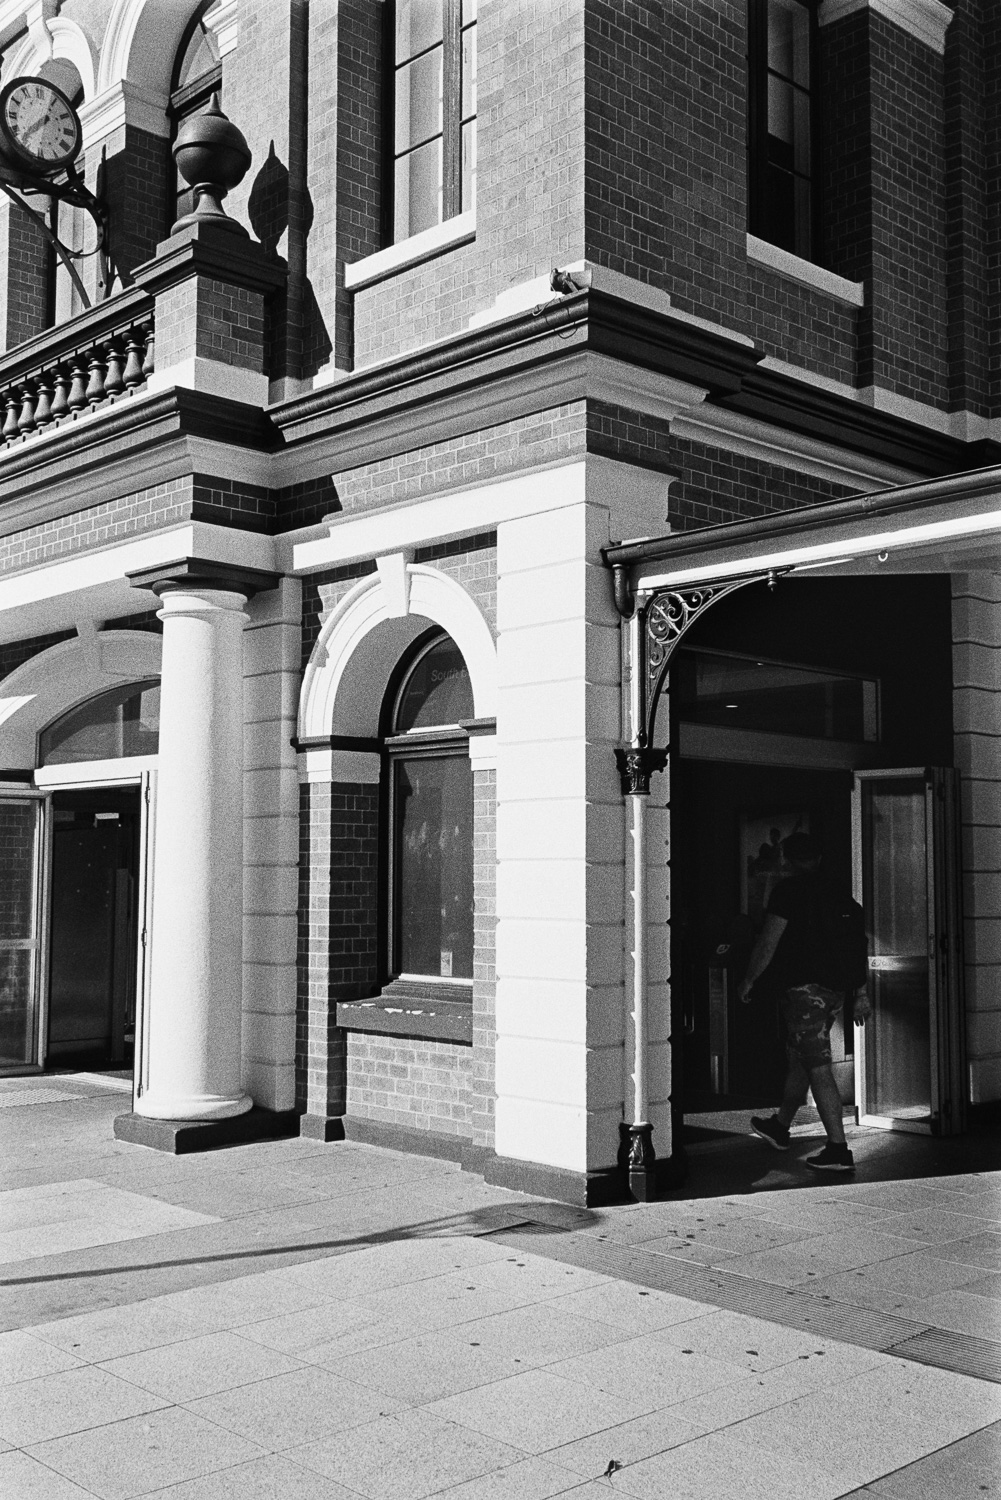  South Brisbane station. 